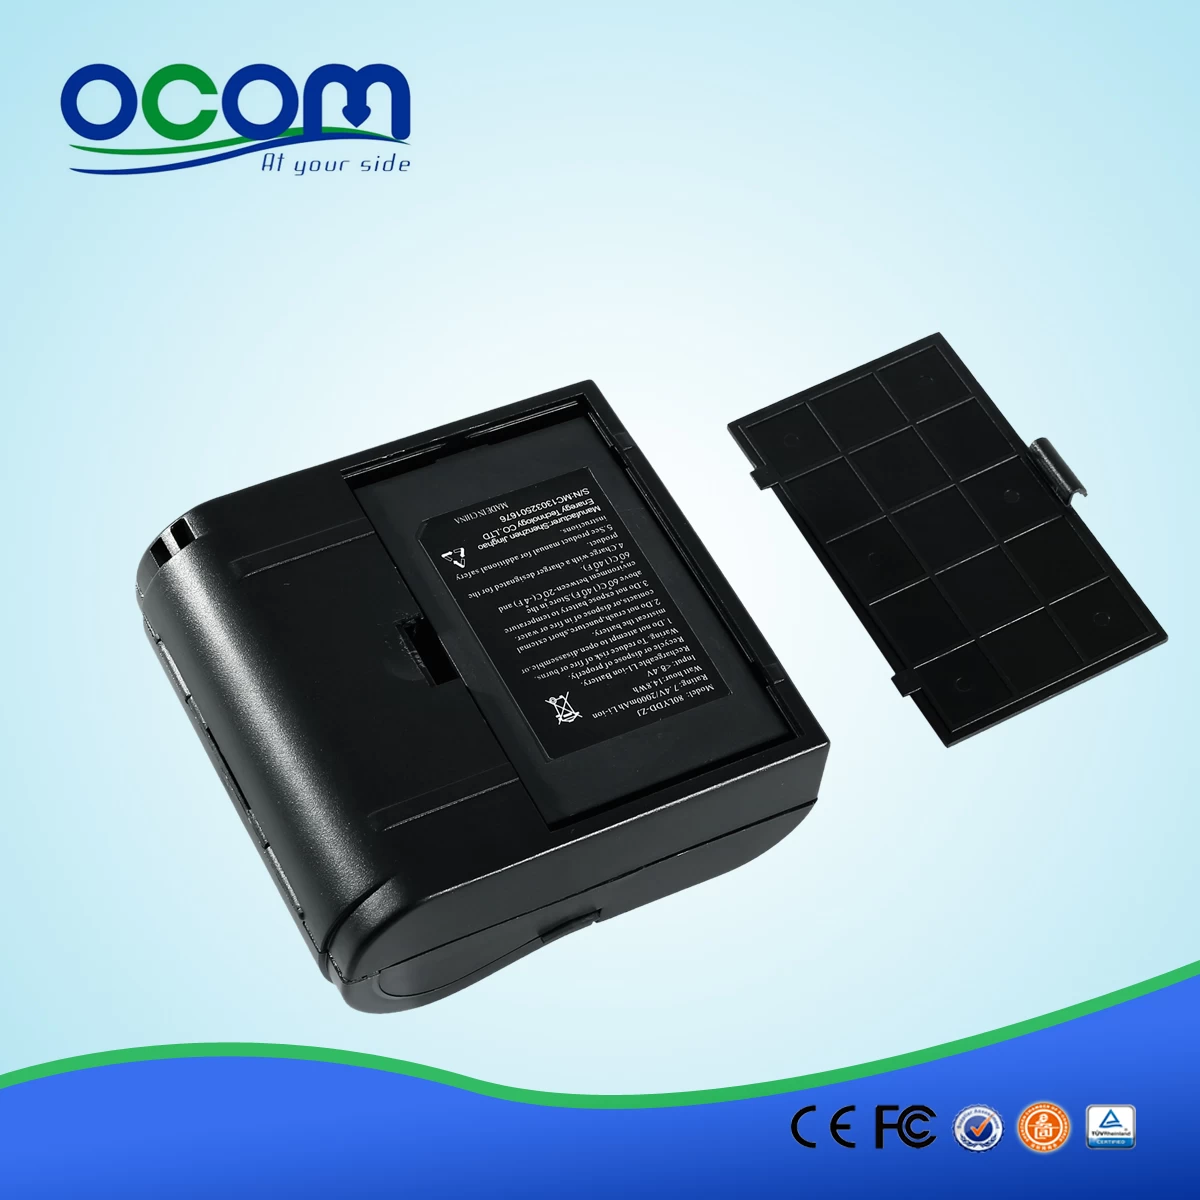 80mm Mini Android And IOS Portable Bluetooth Receipt Printer(OCPP-M082)